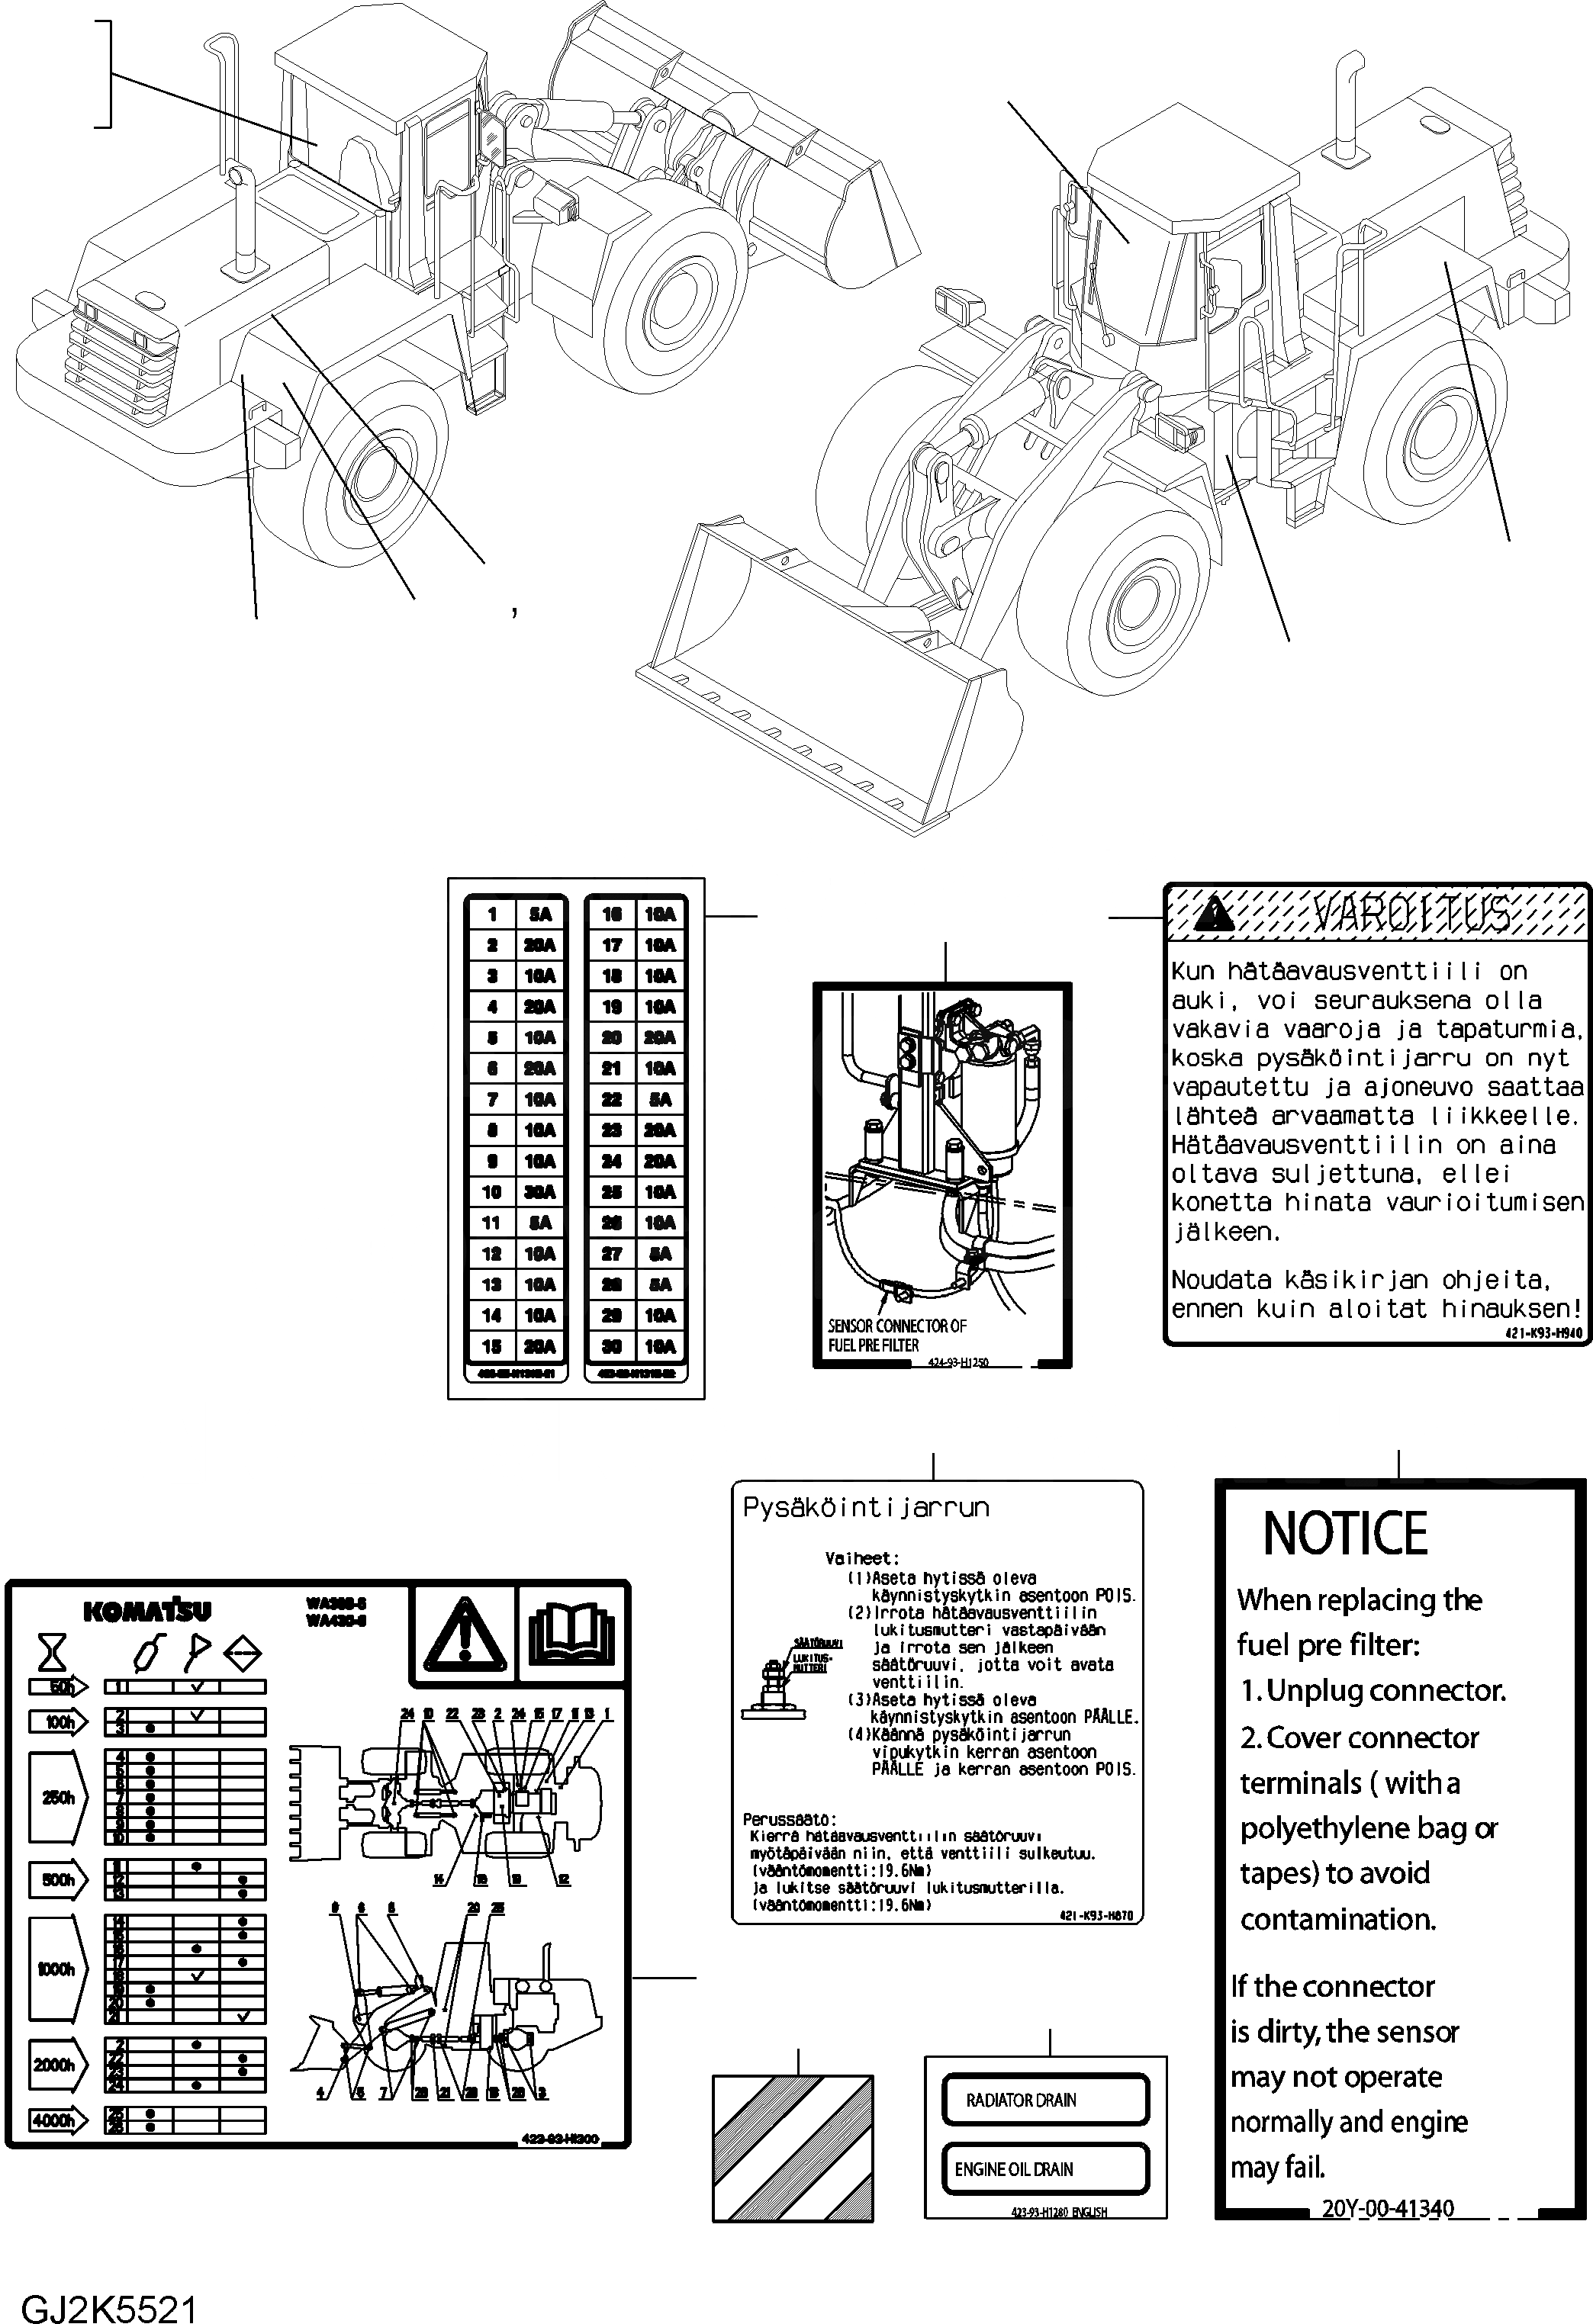 Схема запчастей Komatsu WA430-6E0 - ТАБЛИЧКИ (FINNISH) U МАРКИРОВКА